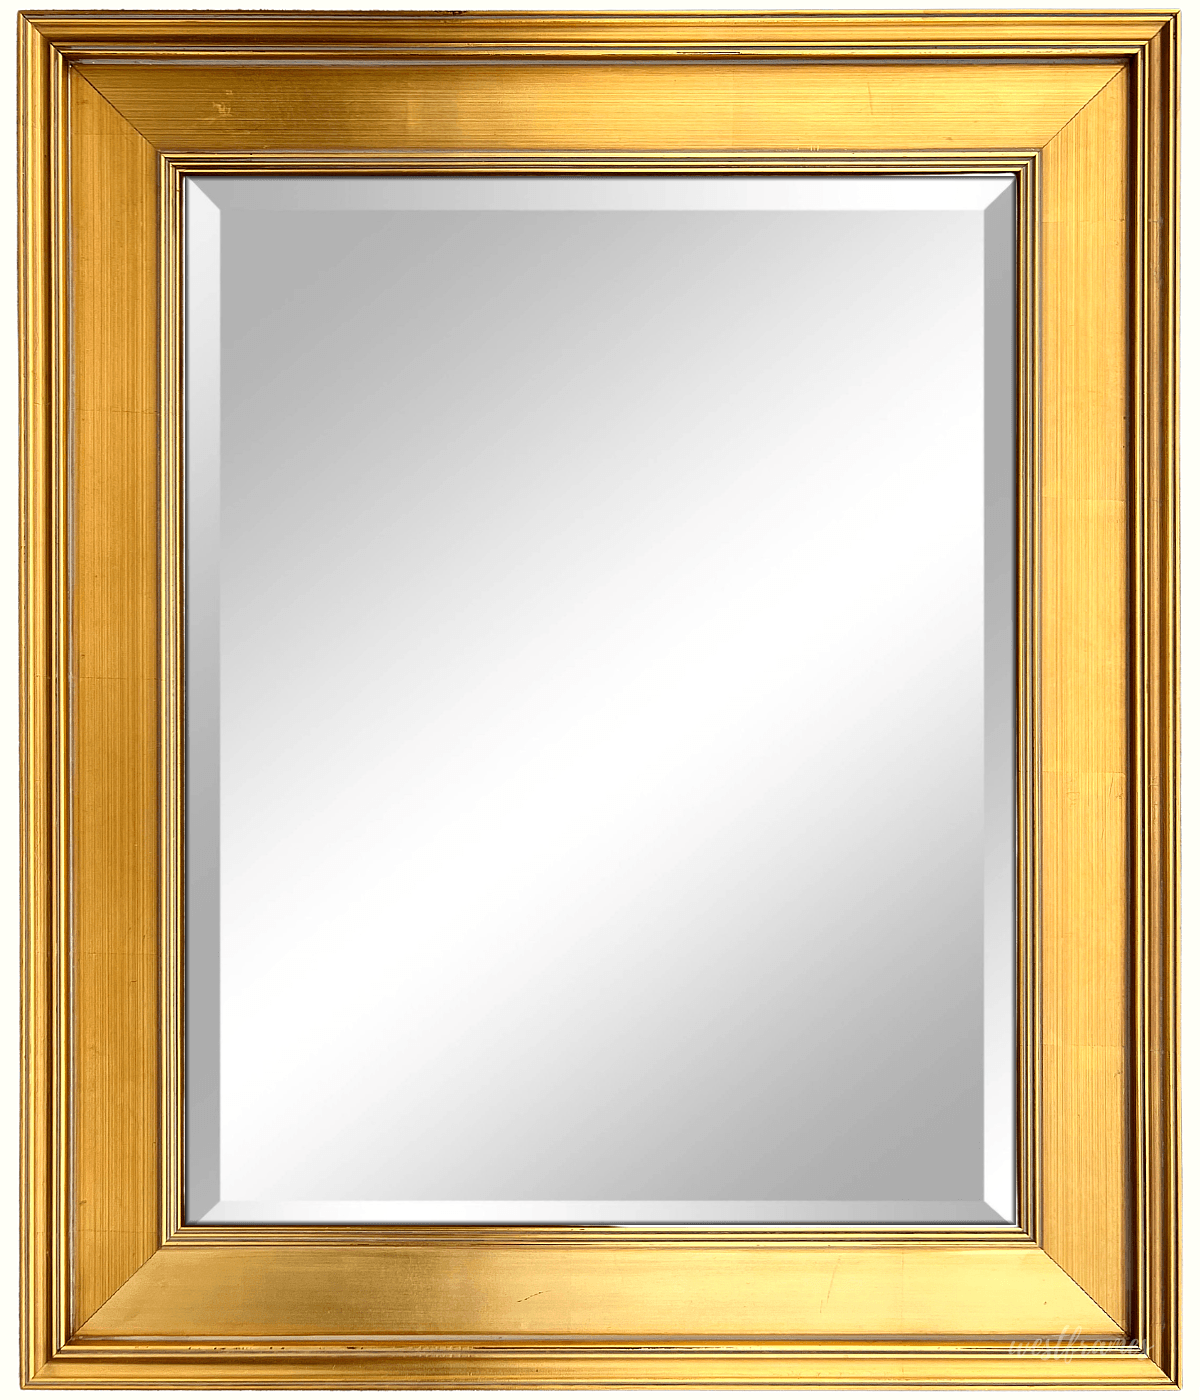 Gallery Classic Antique Gold Leaf Wood Framed Wall Mirror 3" - West Frames